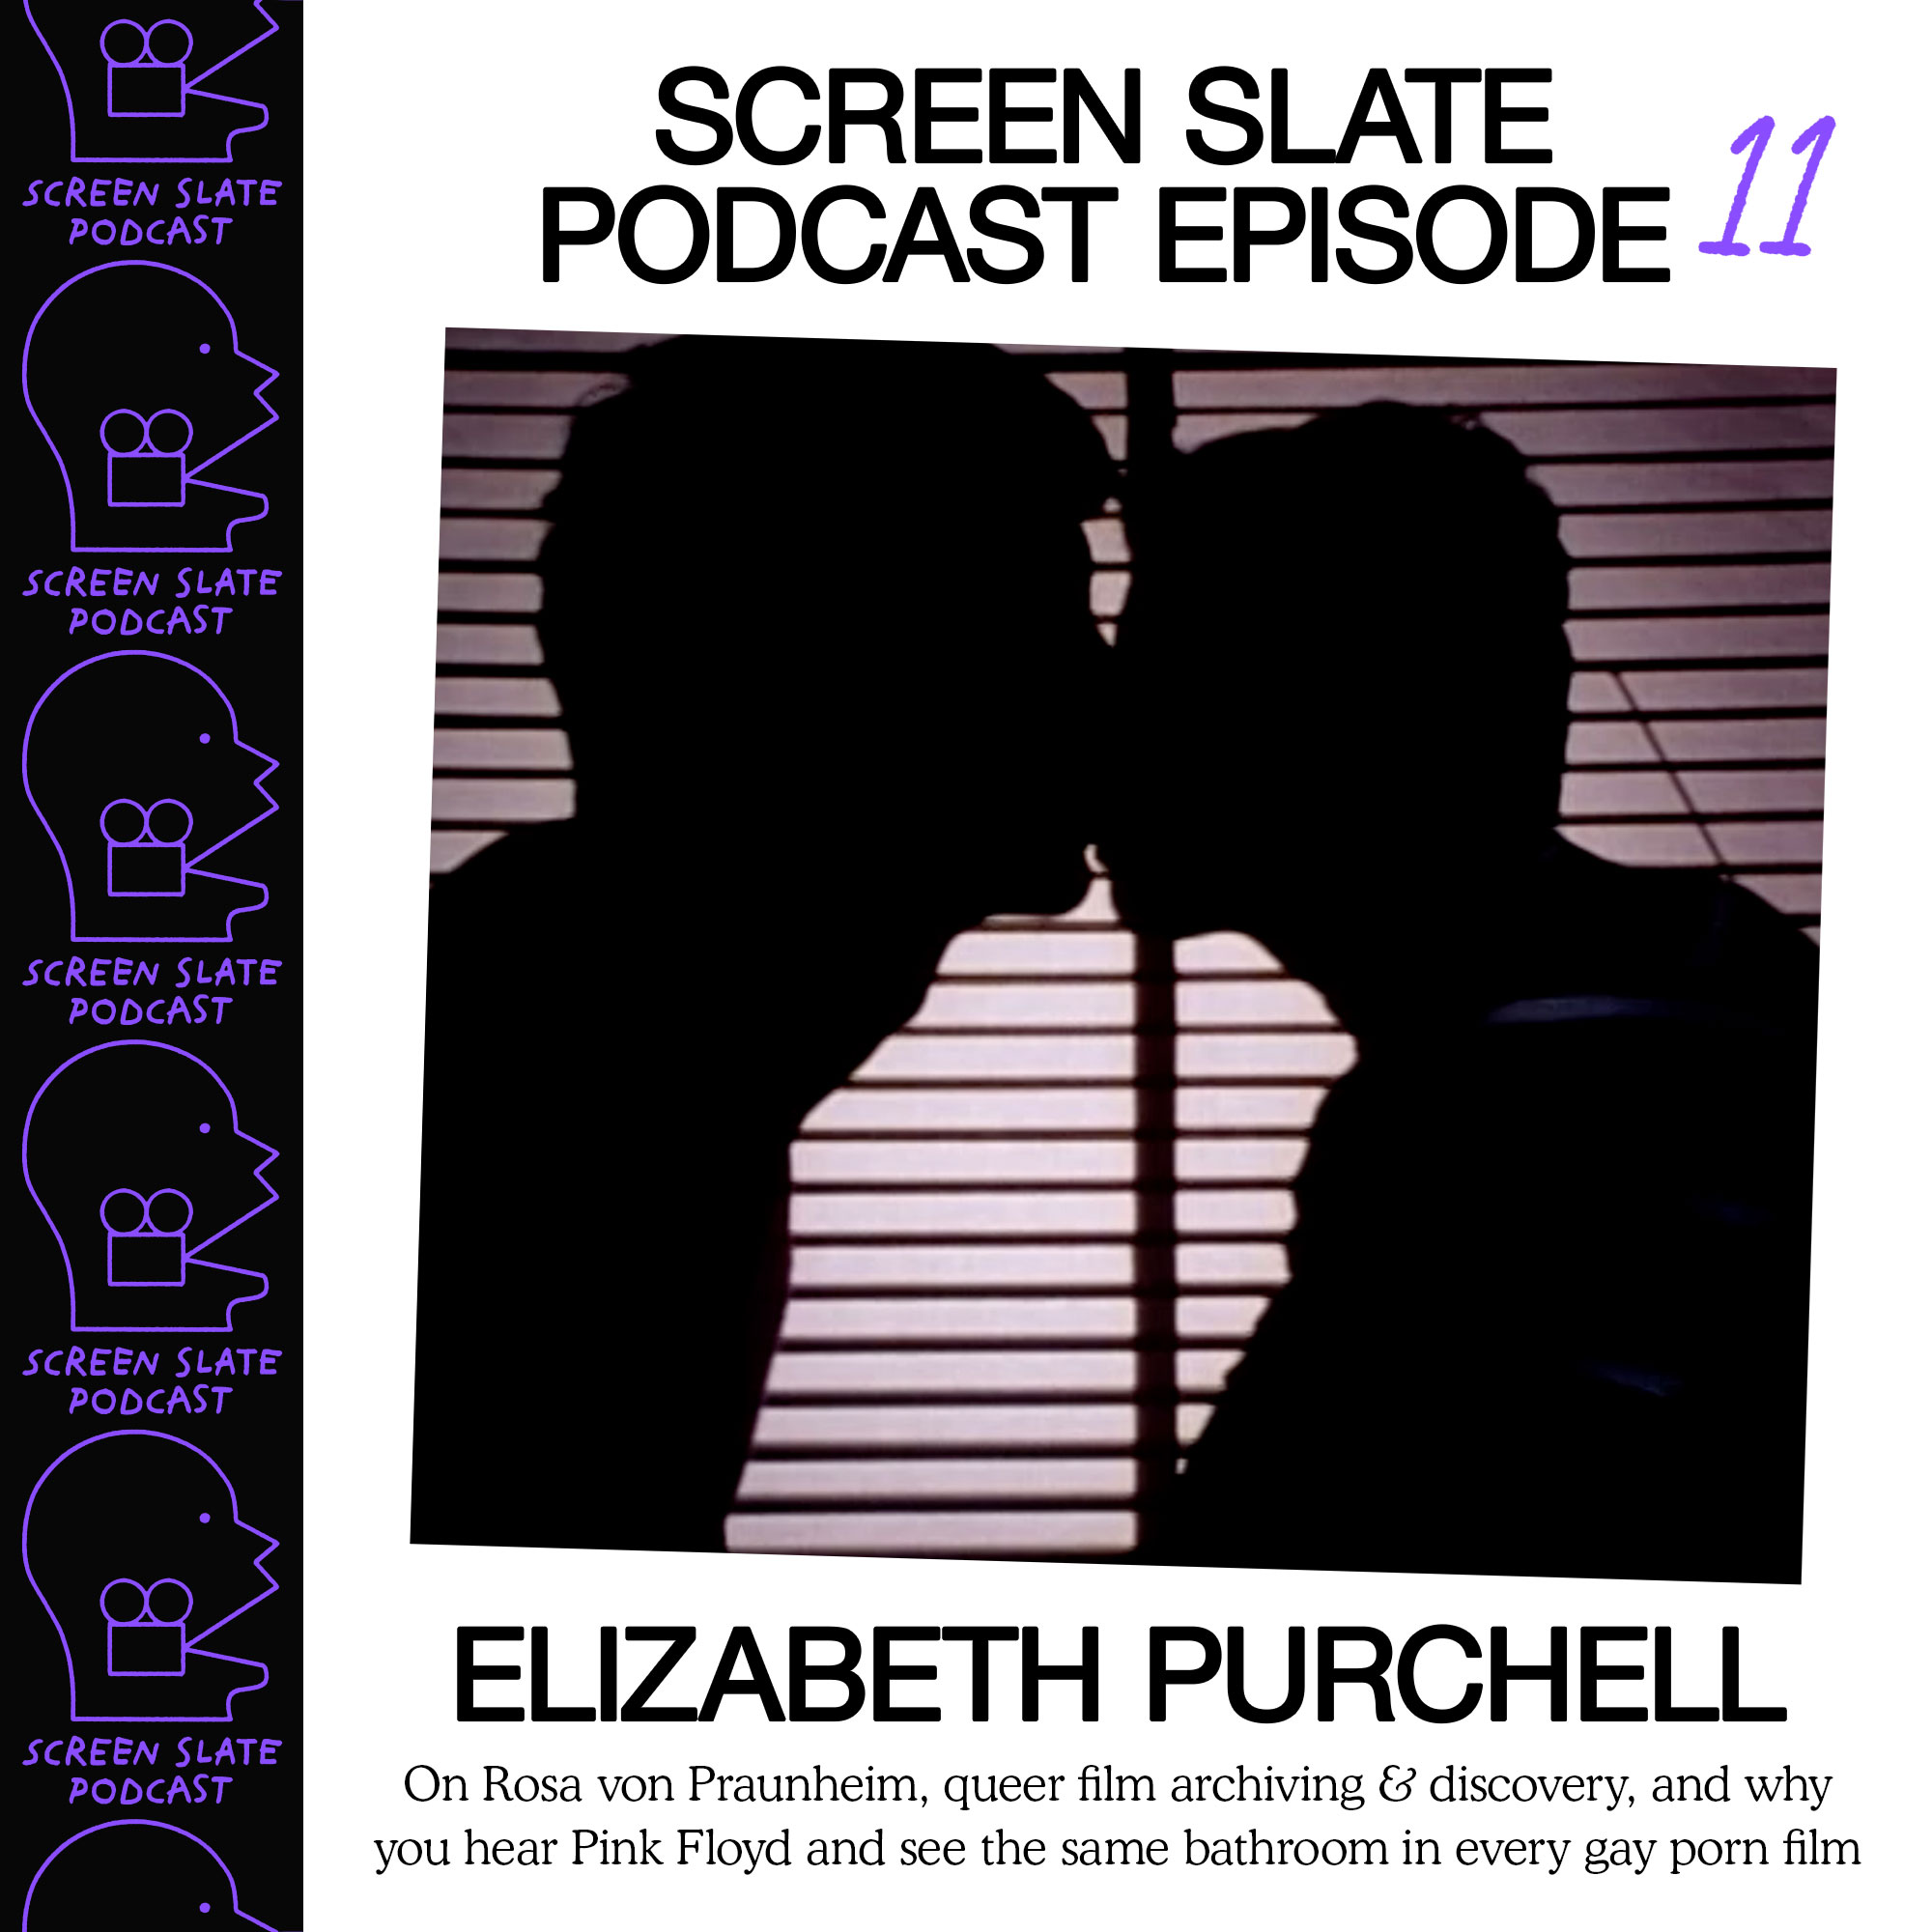 Episode 11 - Ask Any Buddy's Elizabeth Purchell